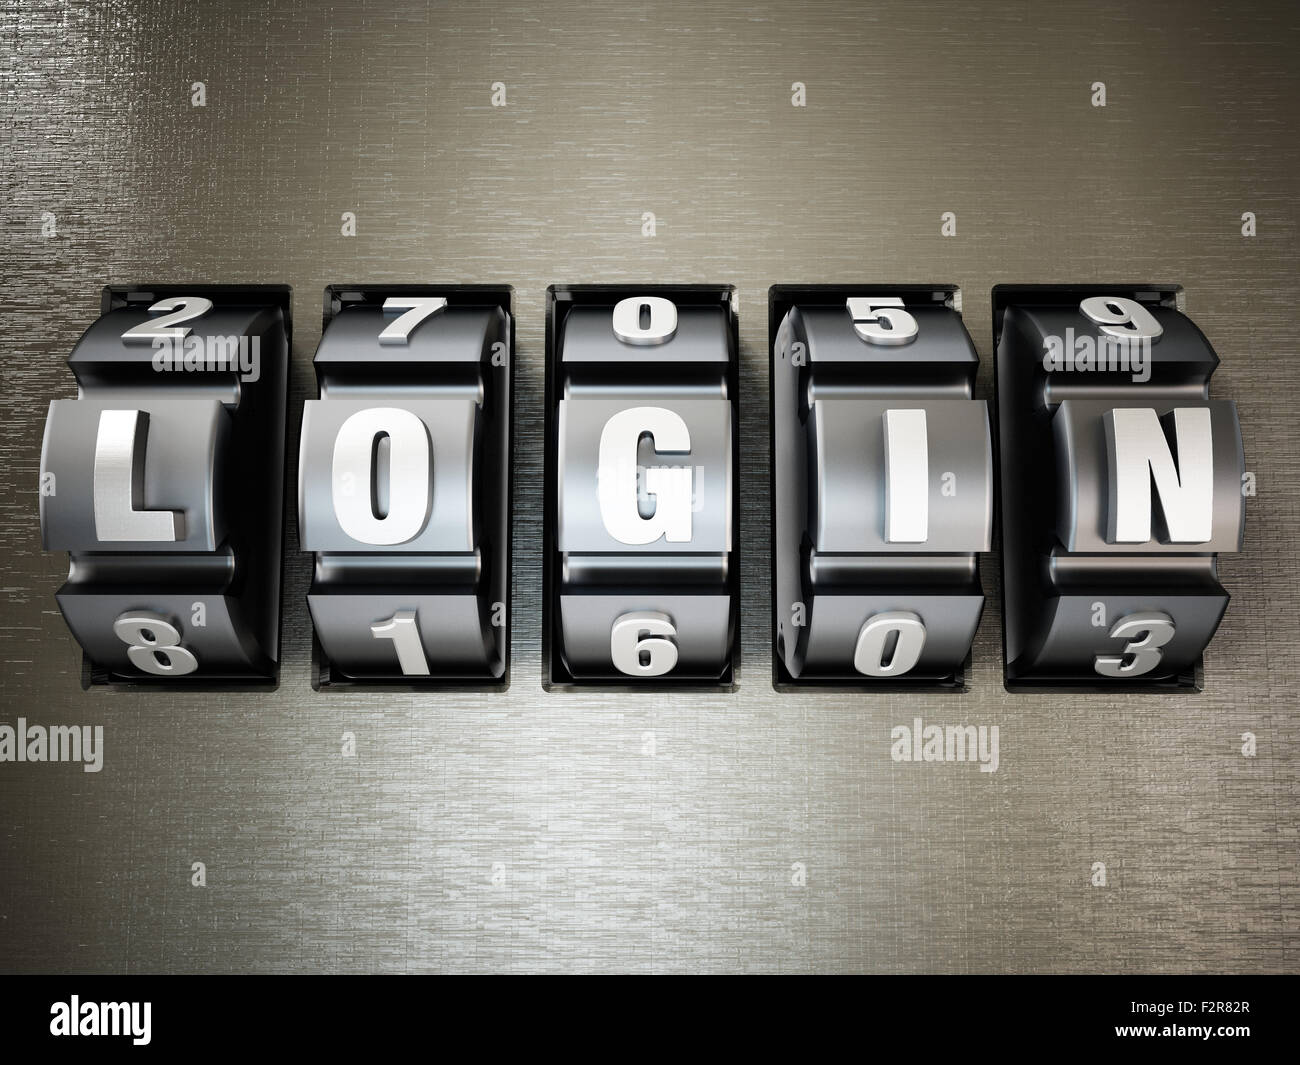 Login text as password among numbers Stock Photo